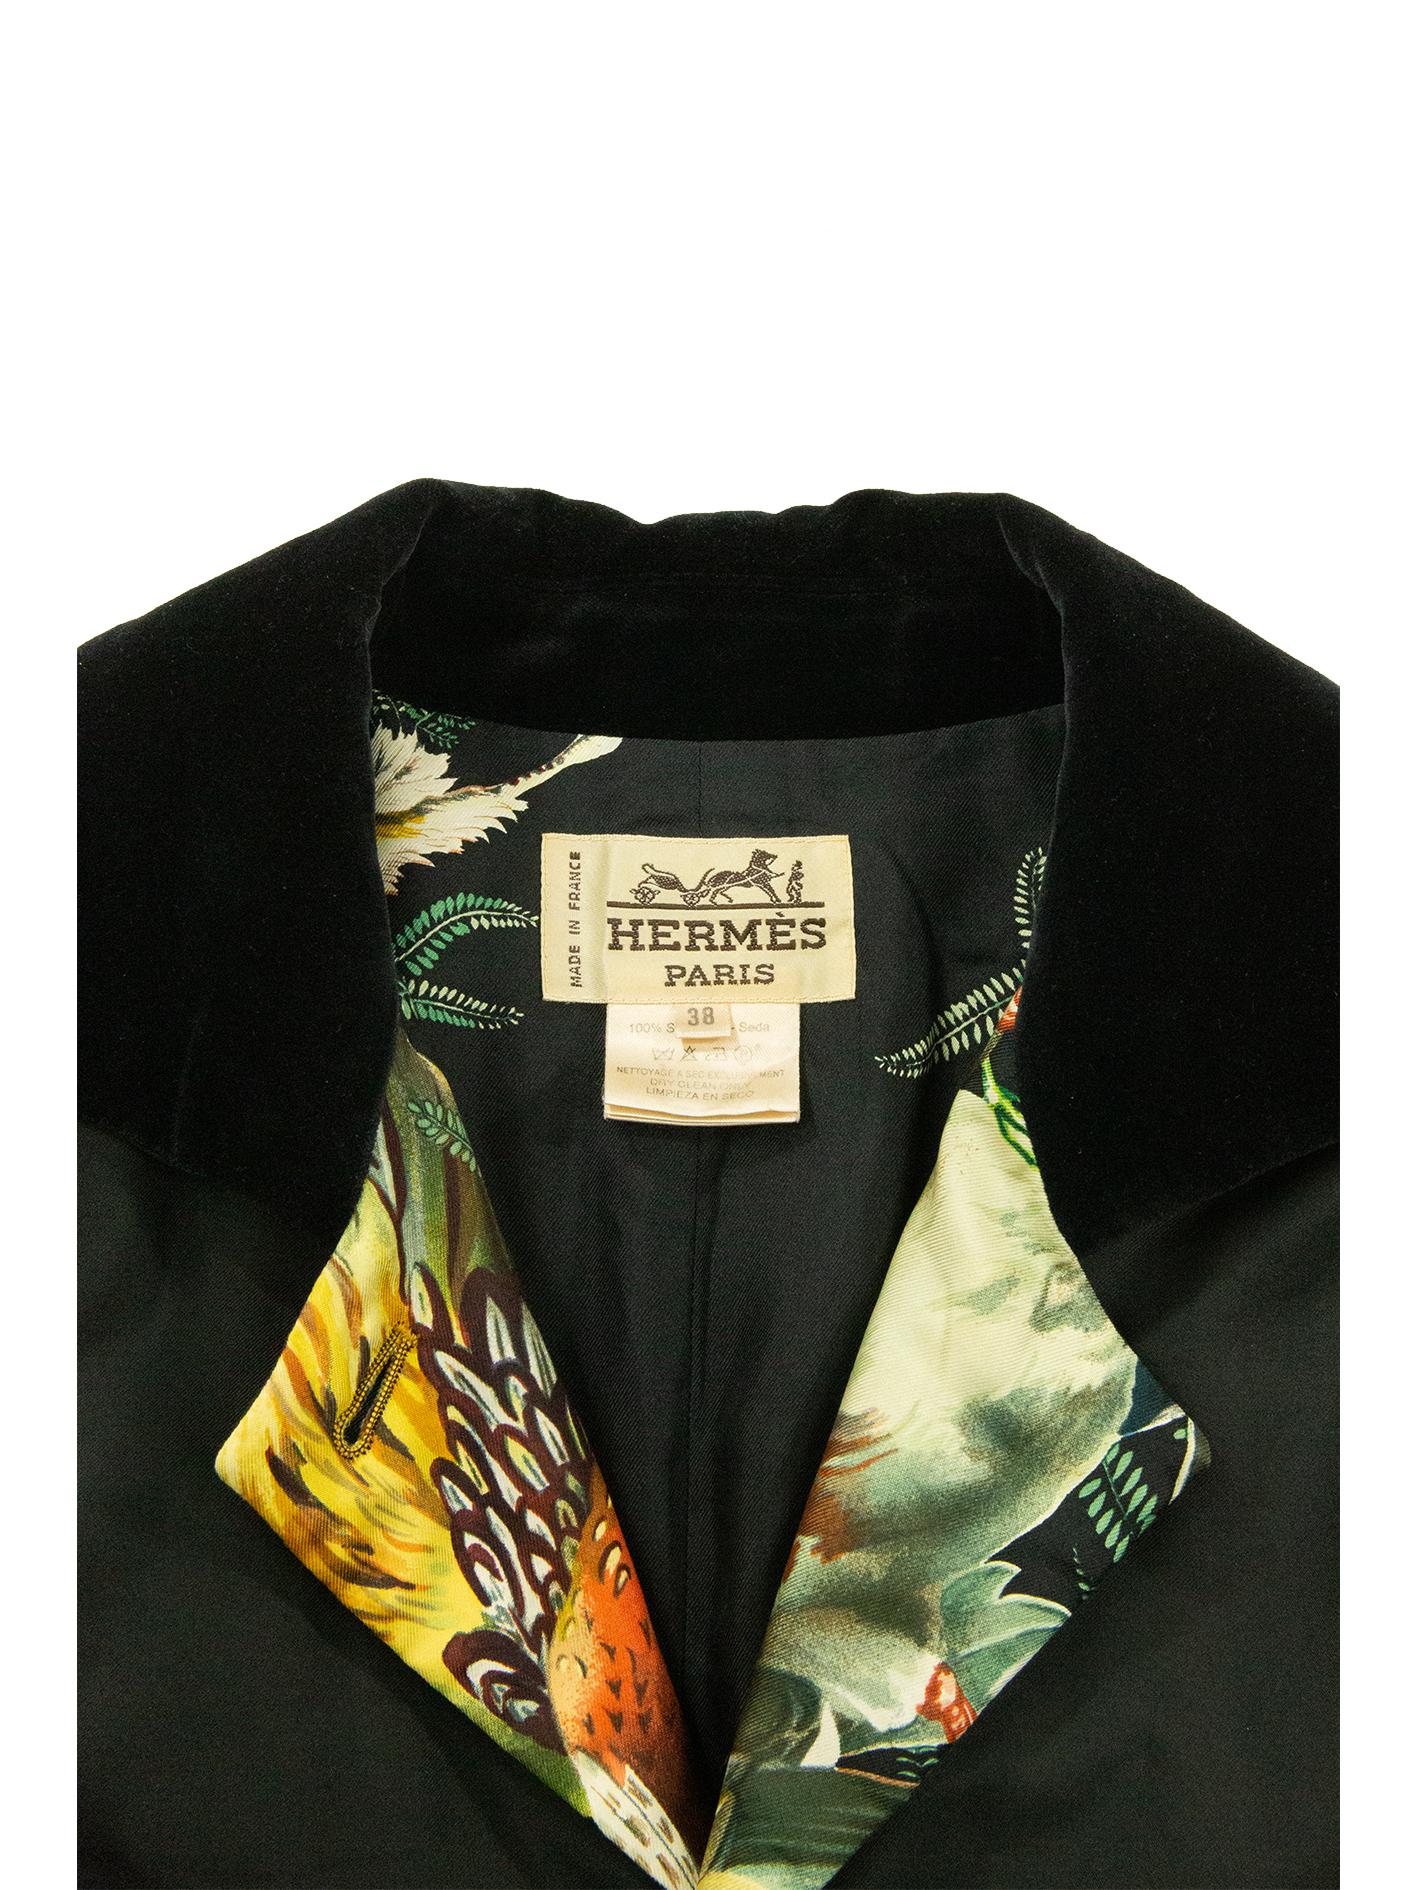 Hermès Black Jacket With Printed Lining For Sale 5